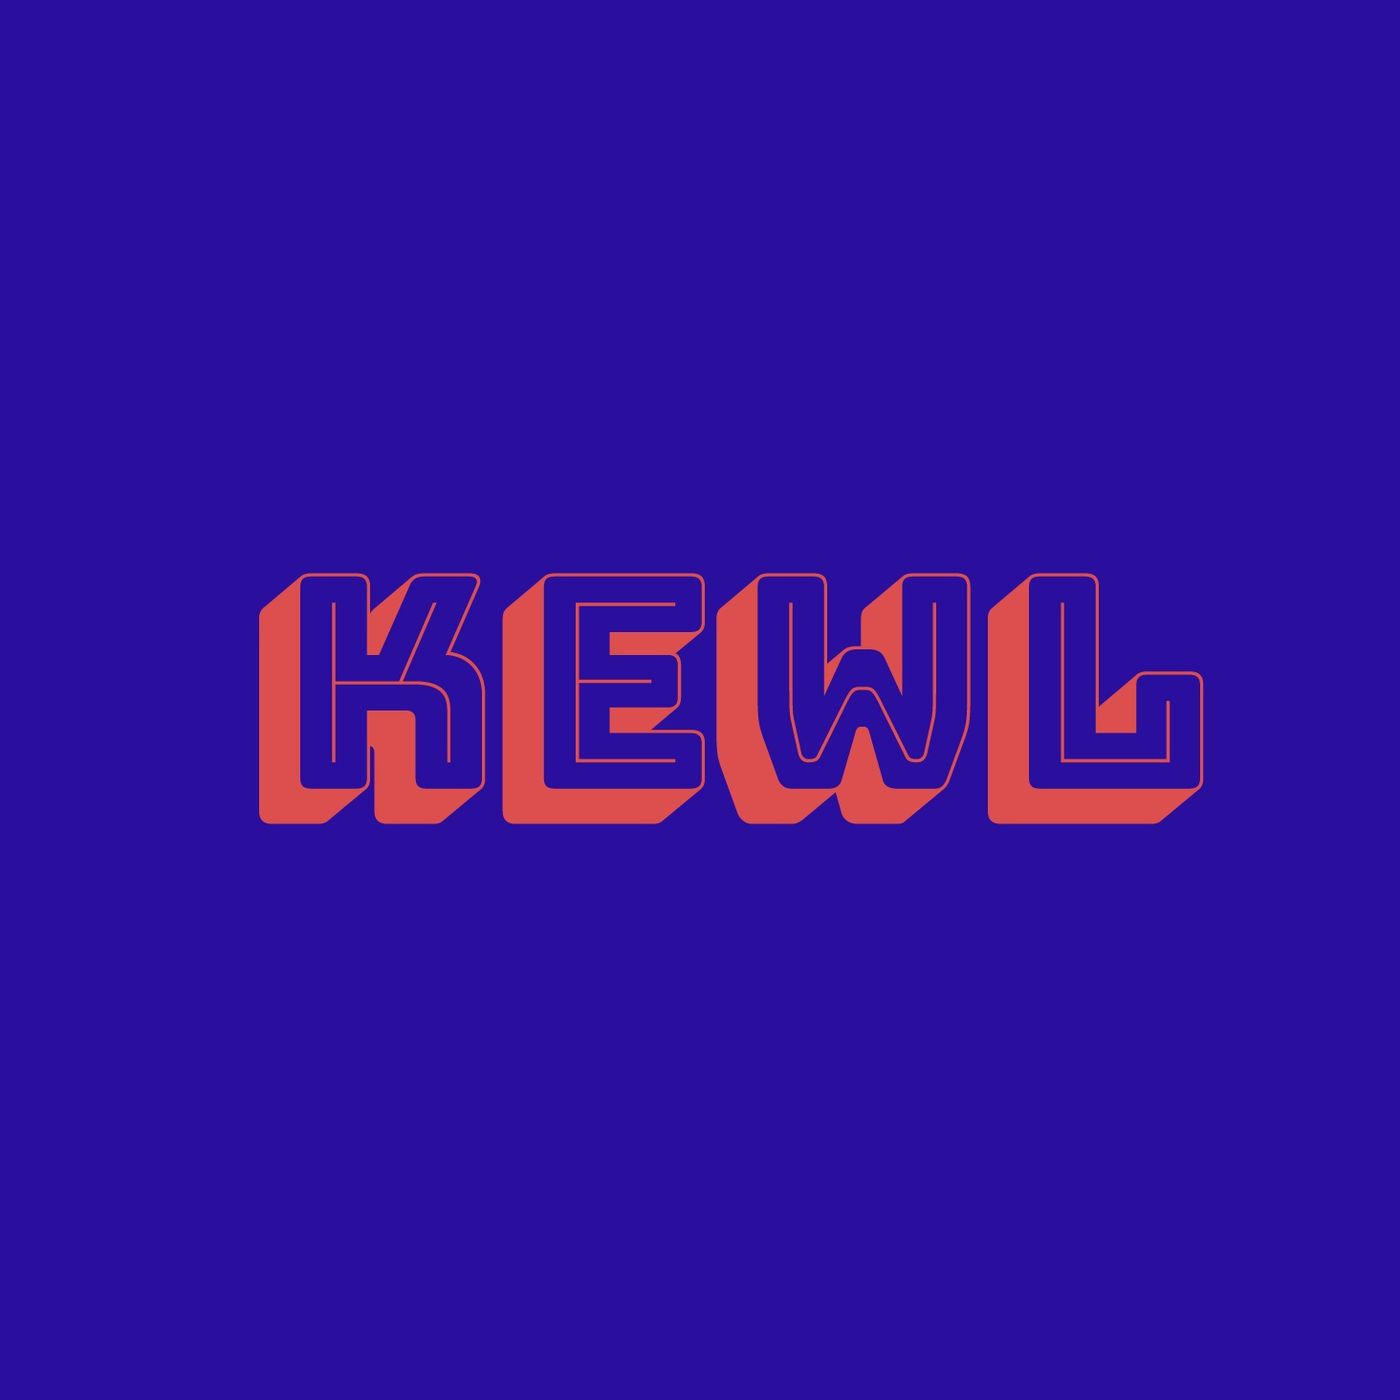 Kewl